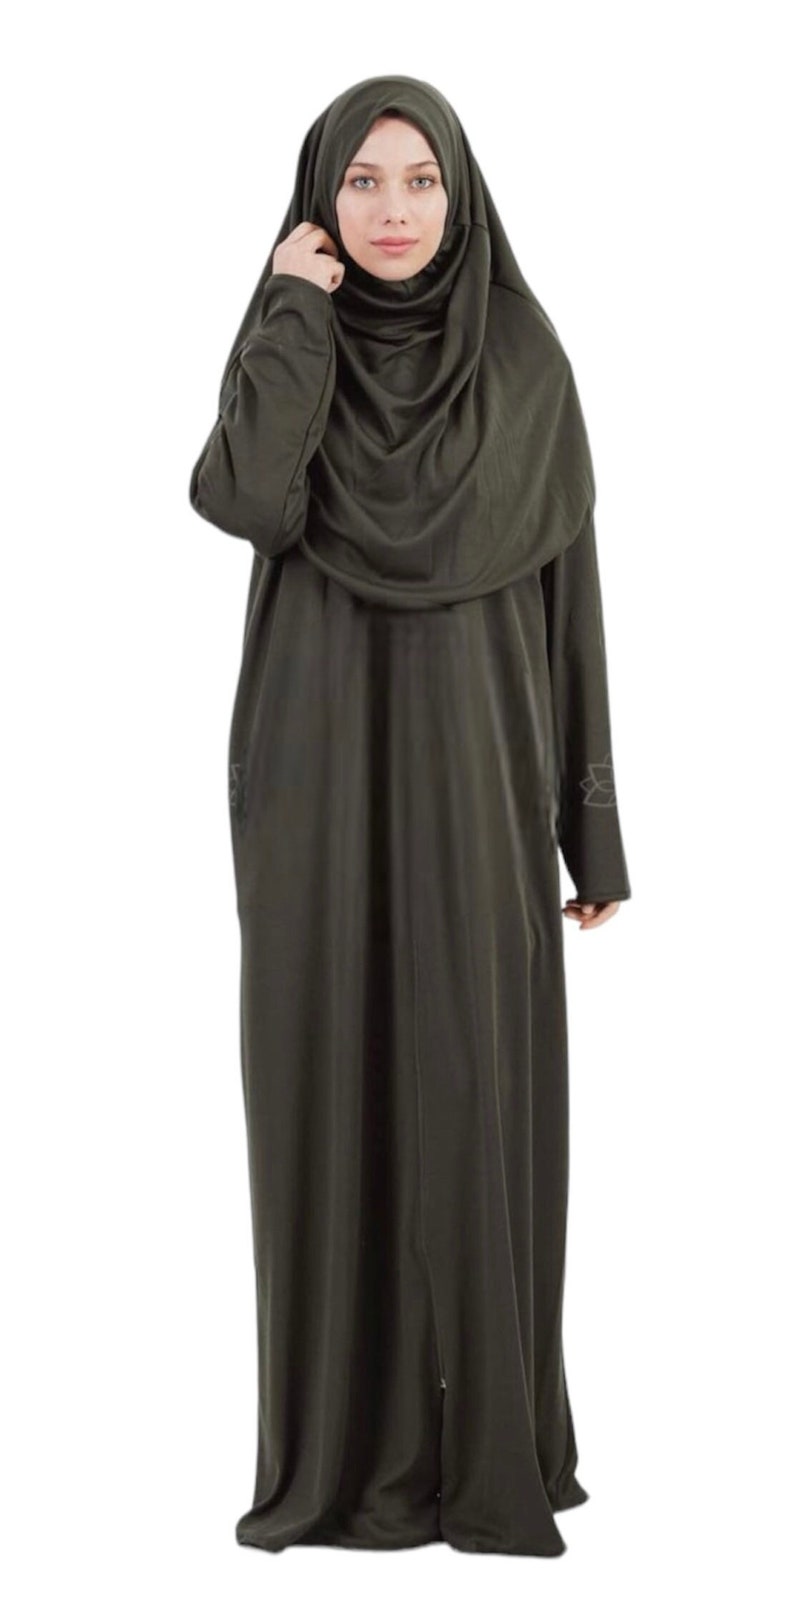 Women's prayer dress image 2